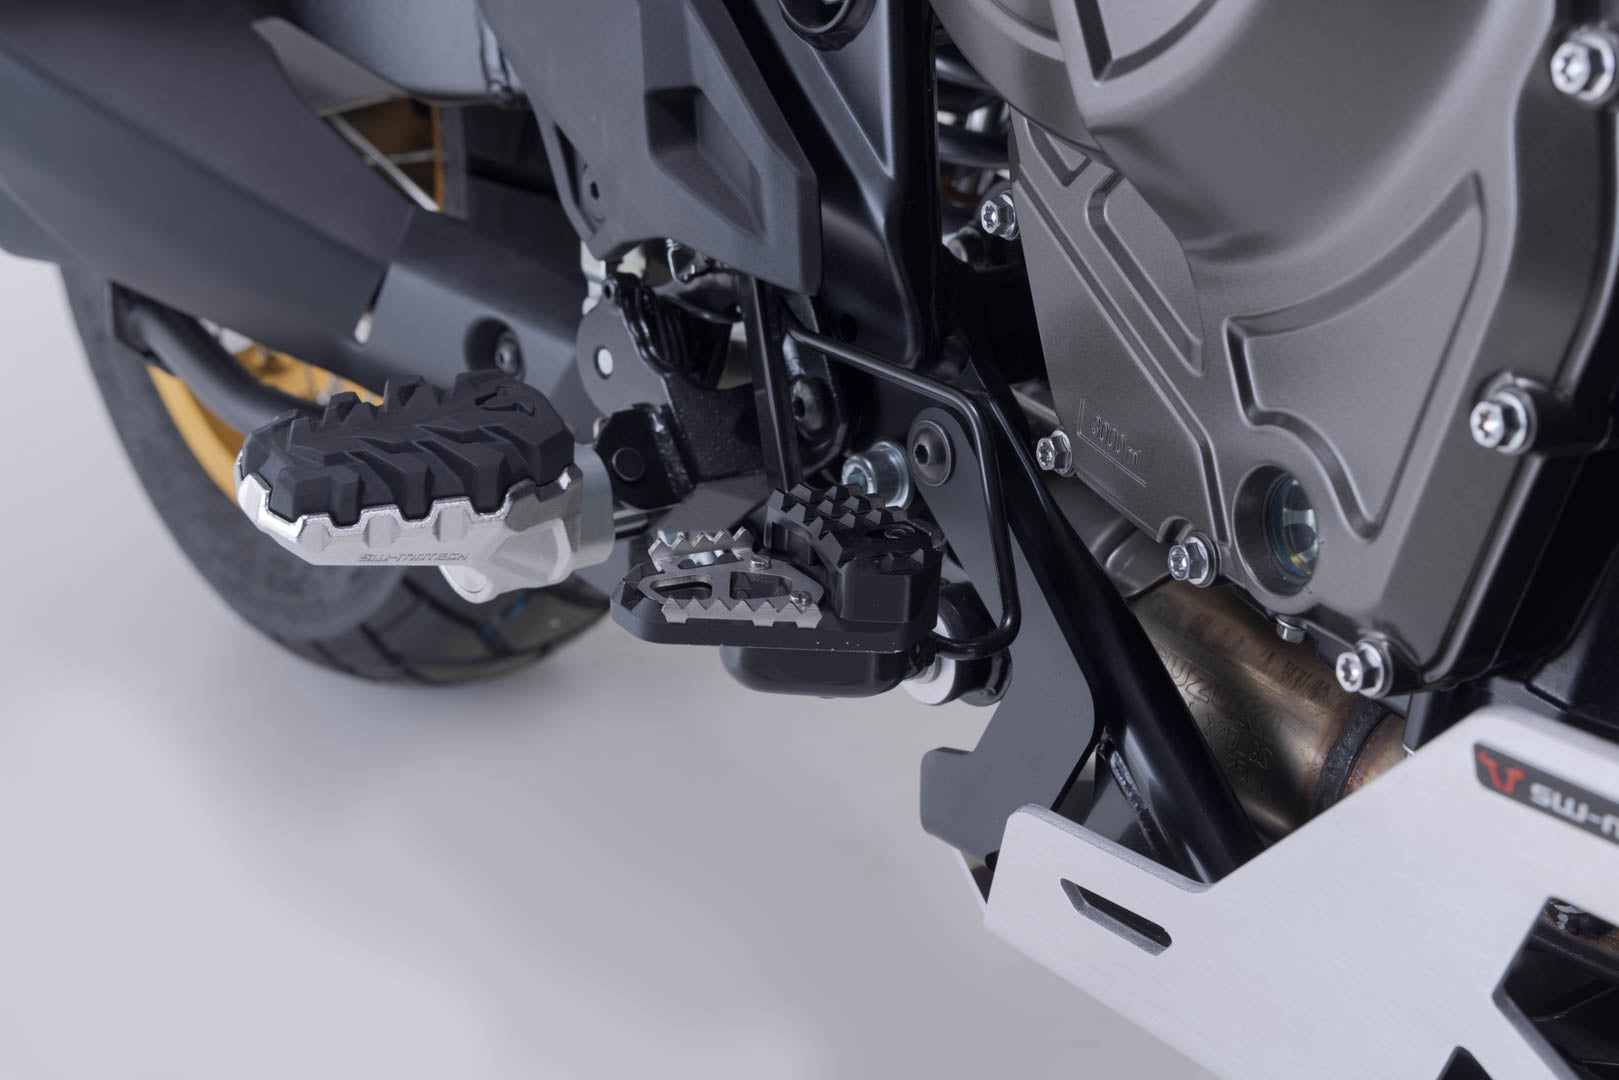 Extension for brake pedal Suzuki V-Strom 800DE (22-) Black